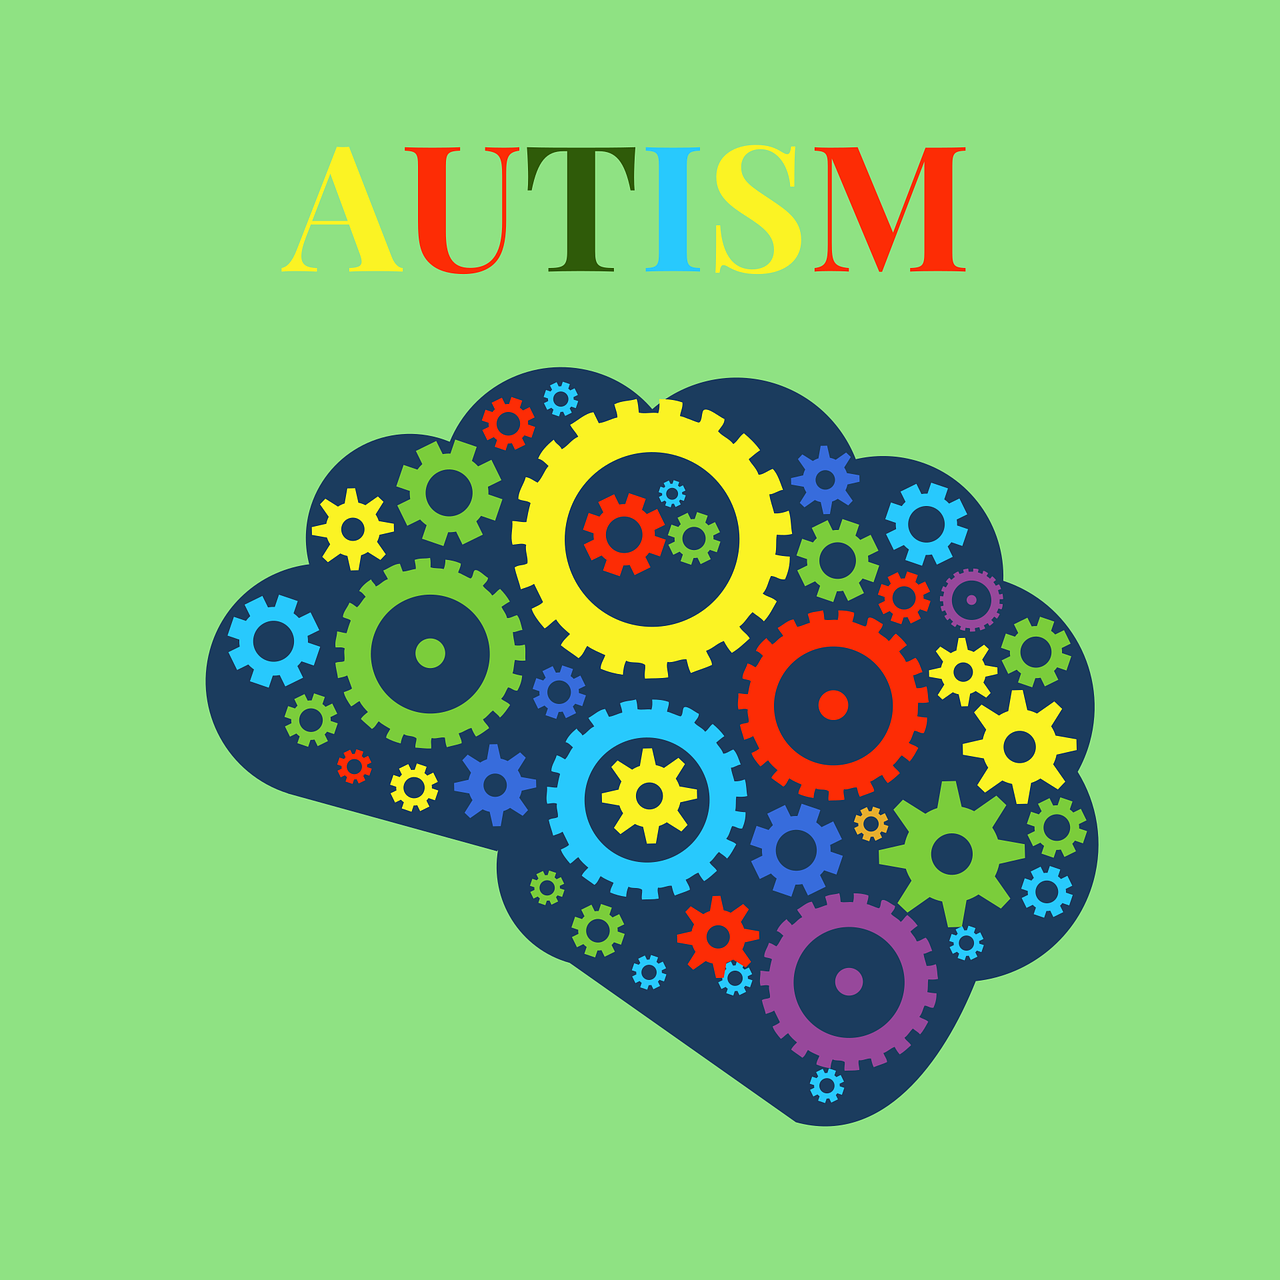 Ce fac in Romania copiii cu autism dupa diagnostic?